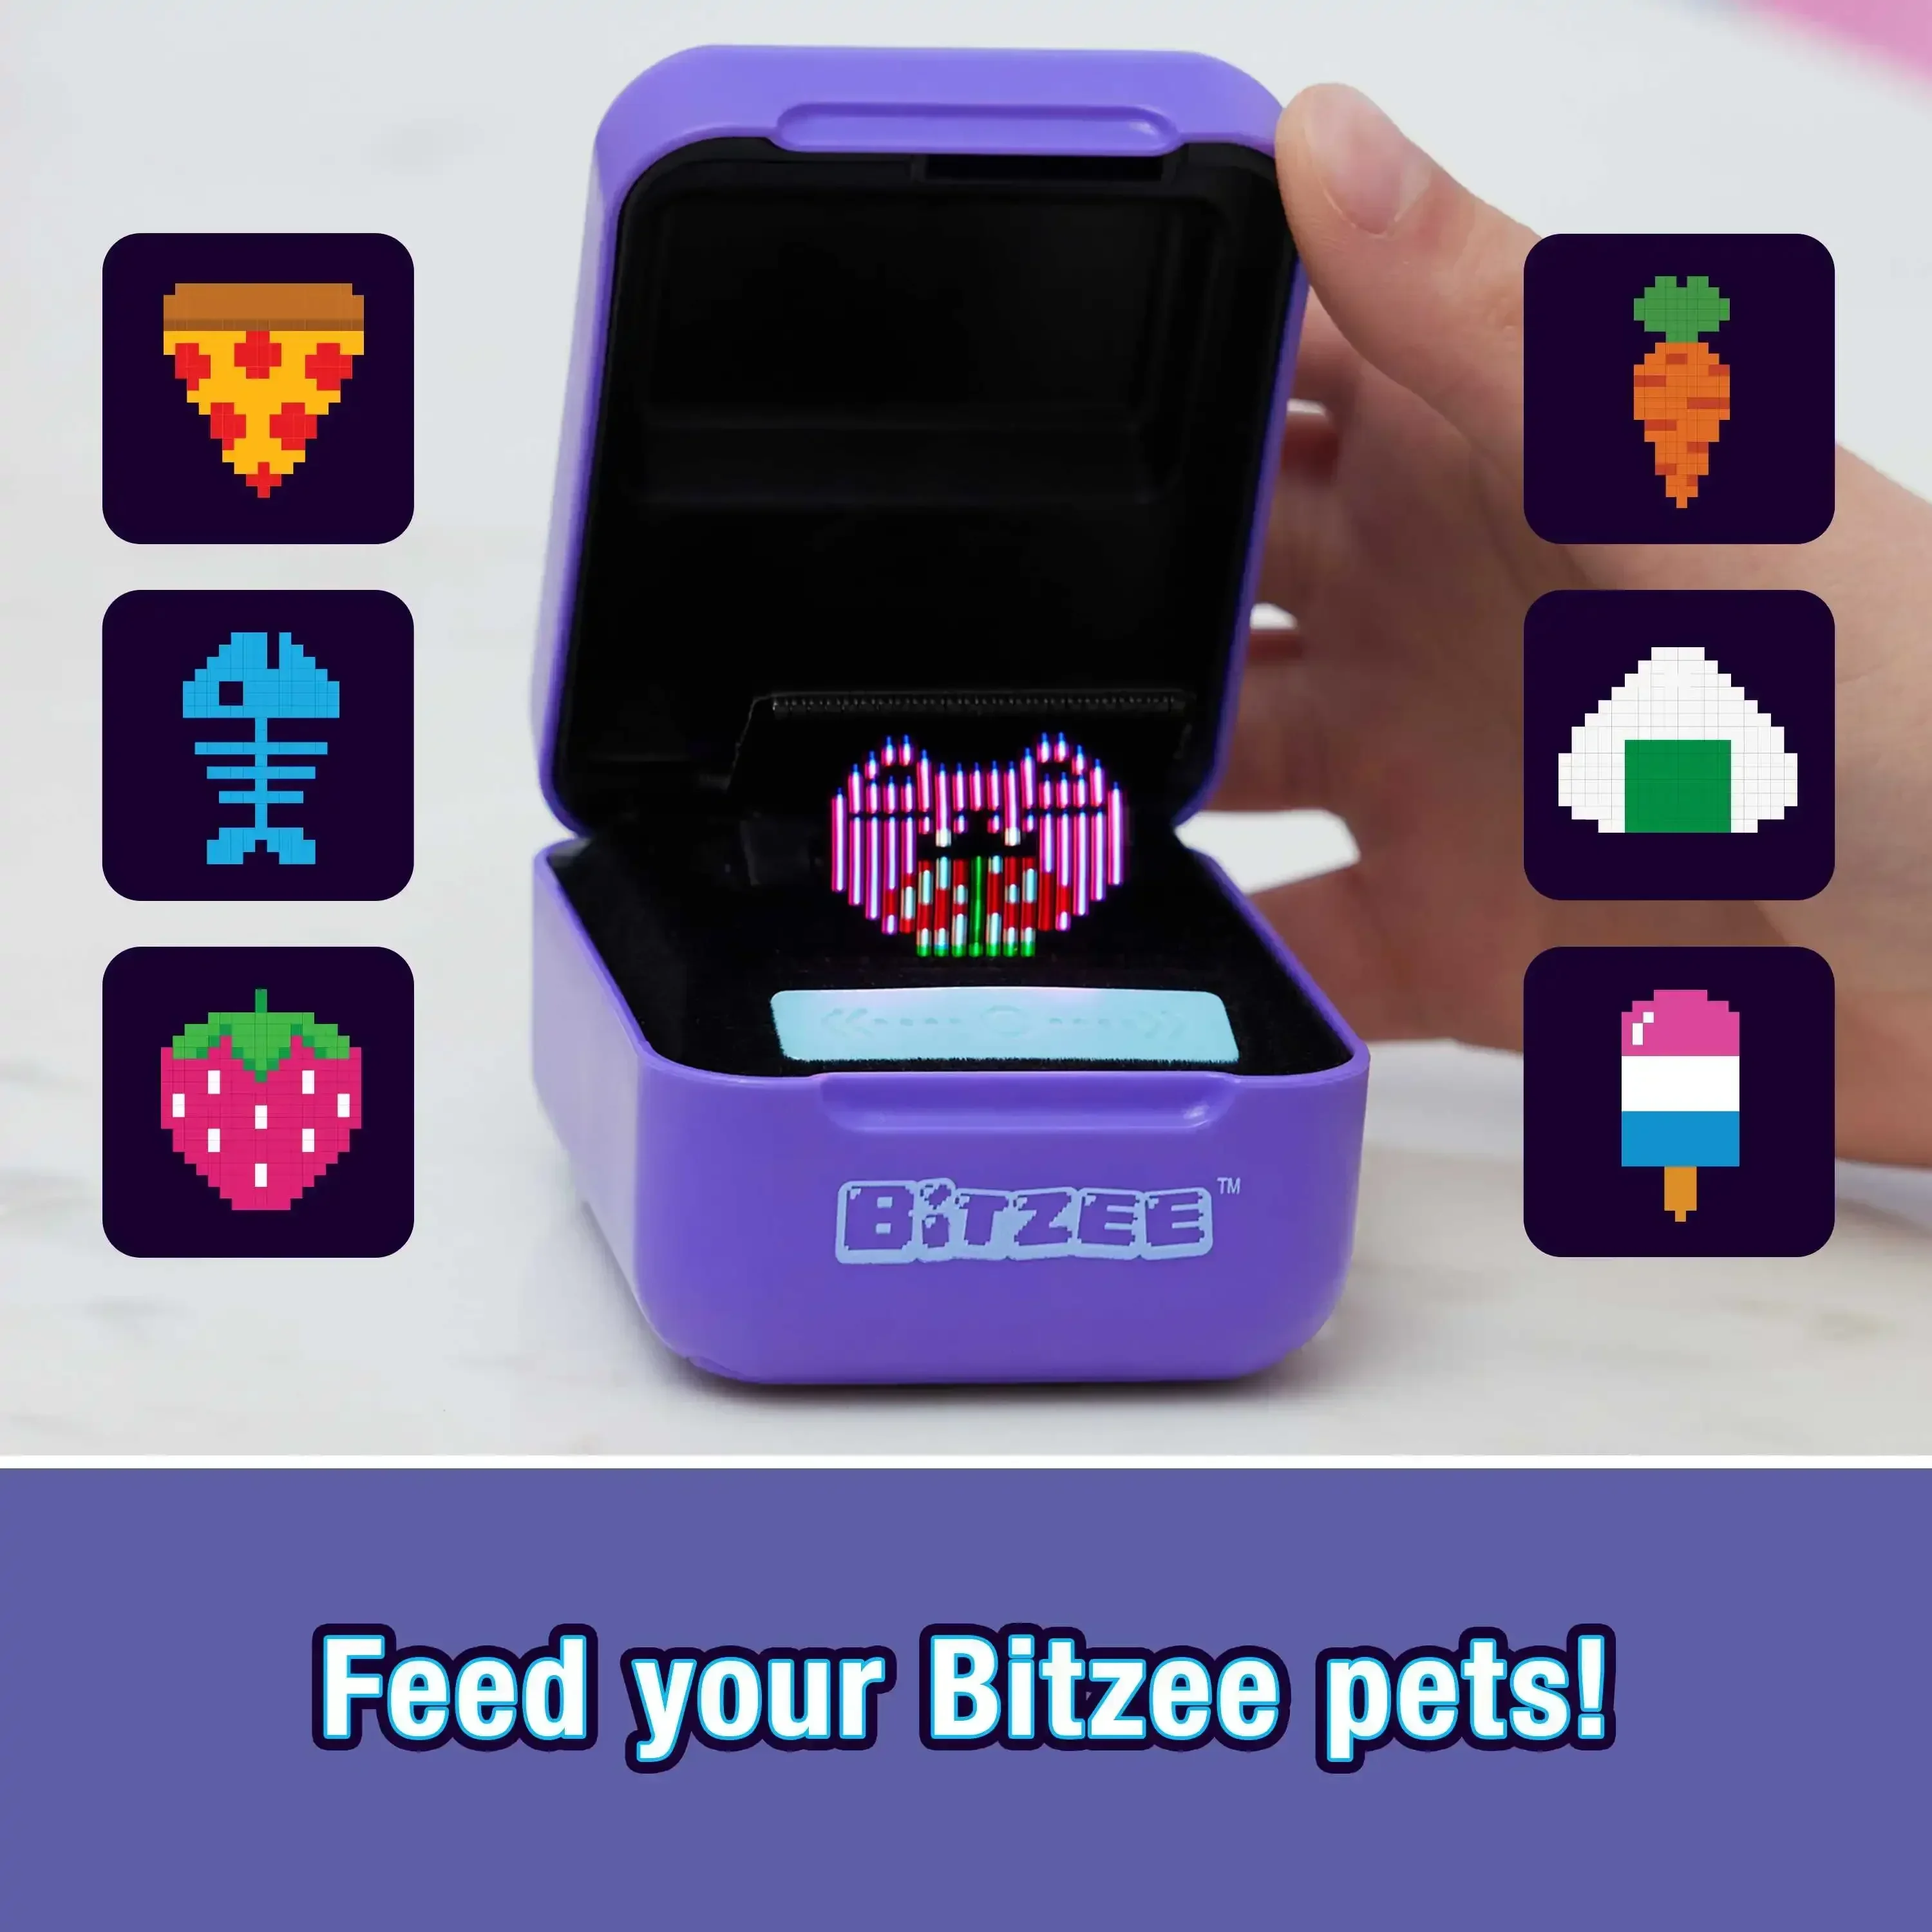 Bitzee Tamagotchi Virtual Mascot Digital Pet Toys For Children Bitzee Digital Toyelectronic Digital Pets Virtual Games Toys Girl image_2